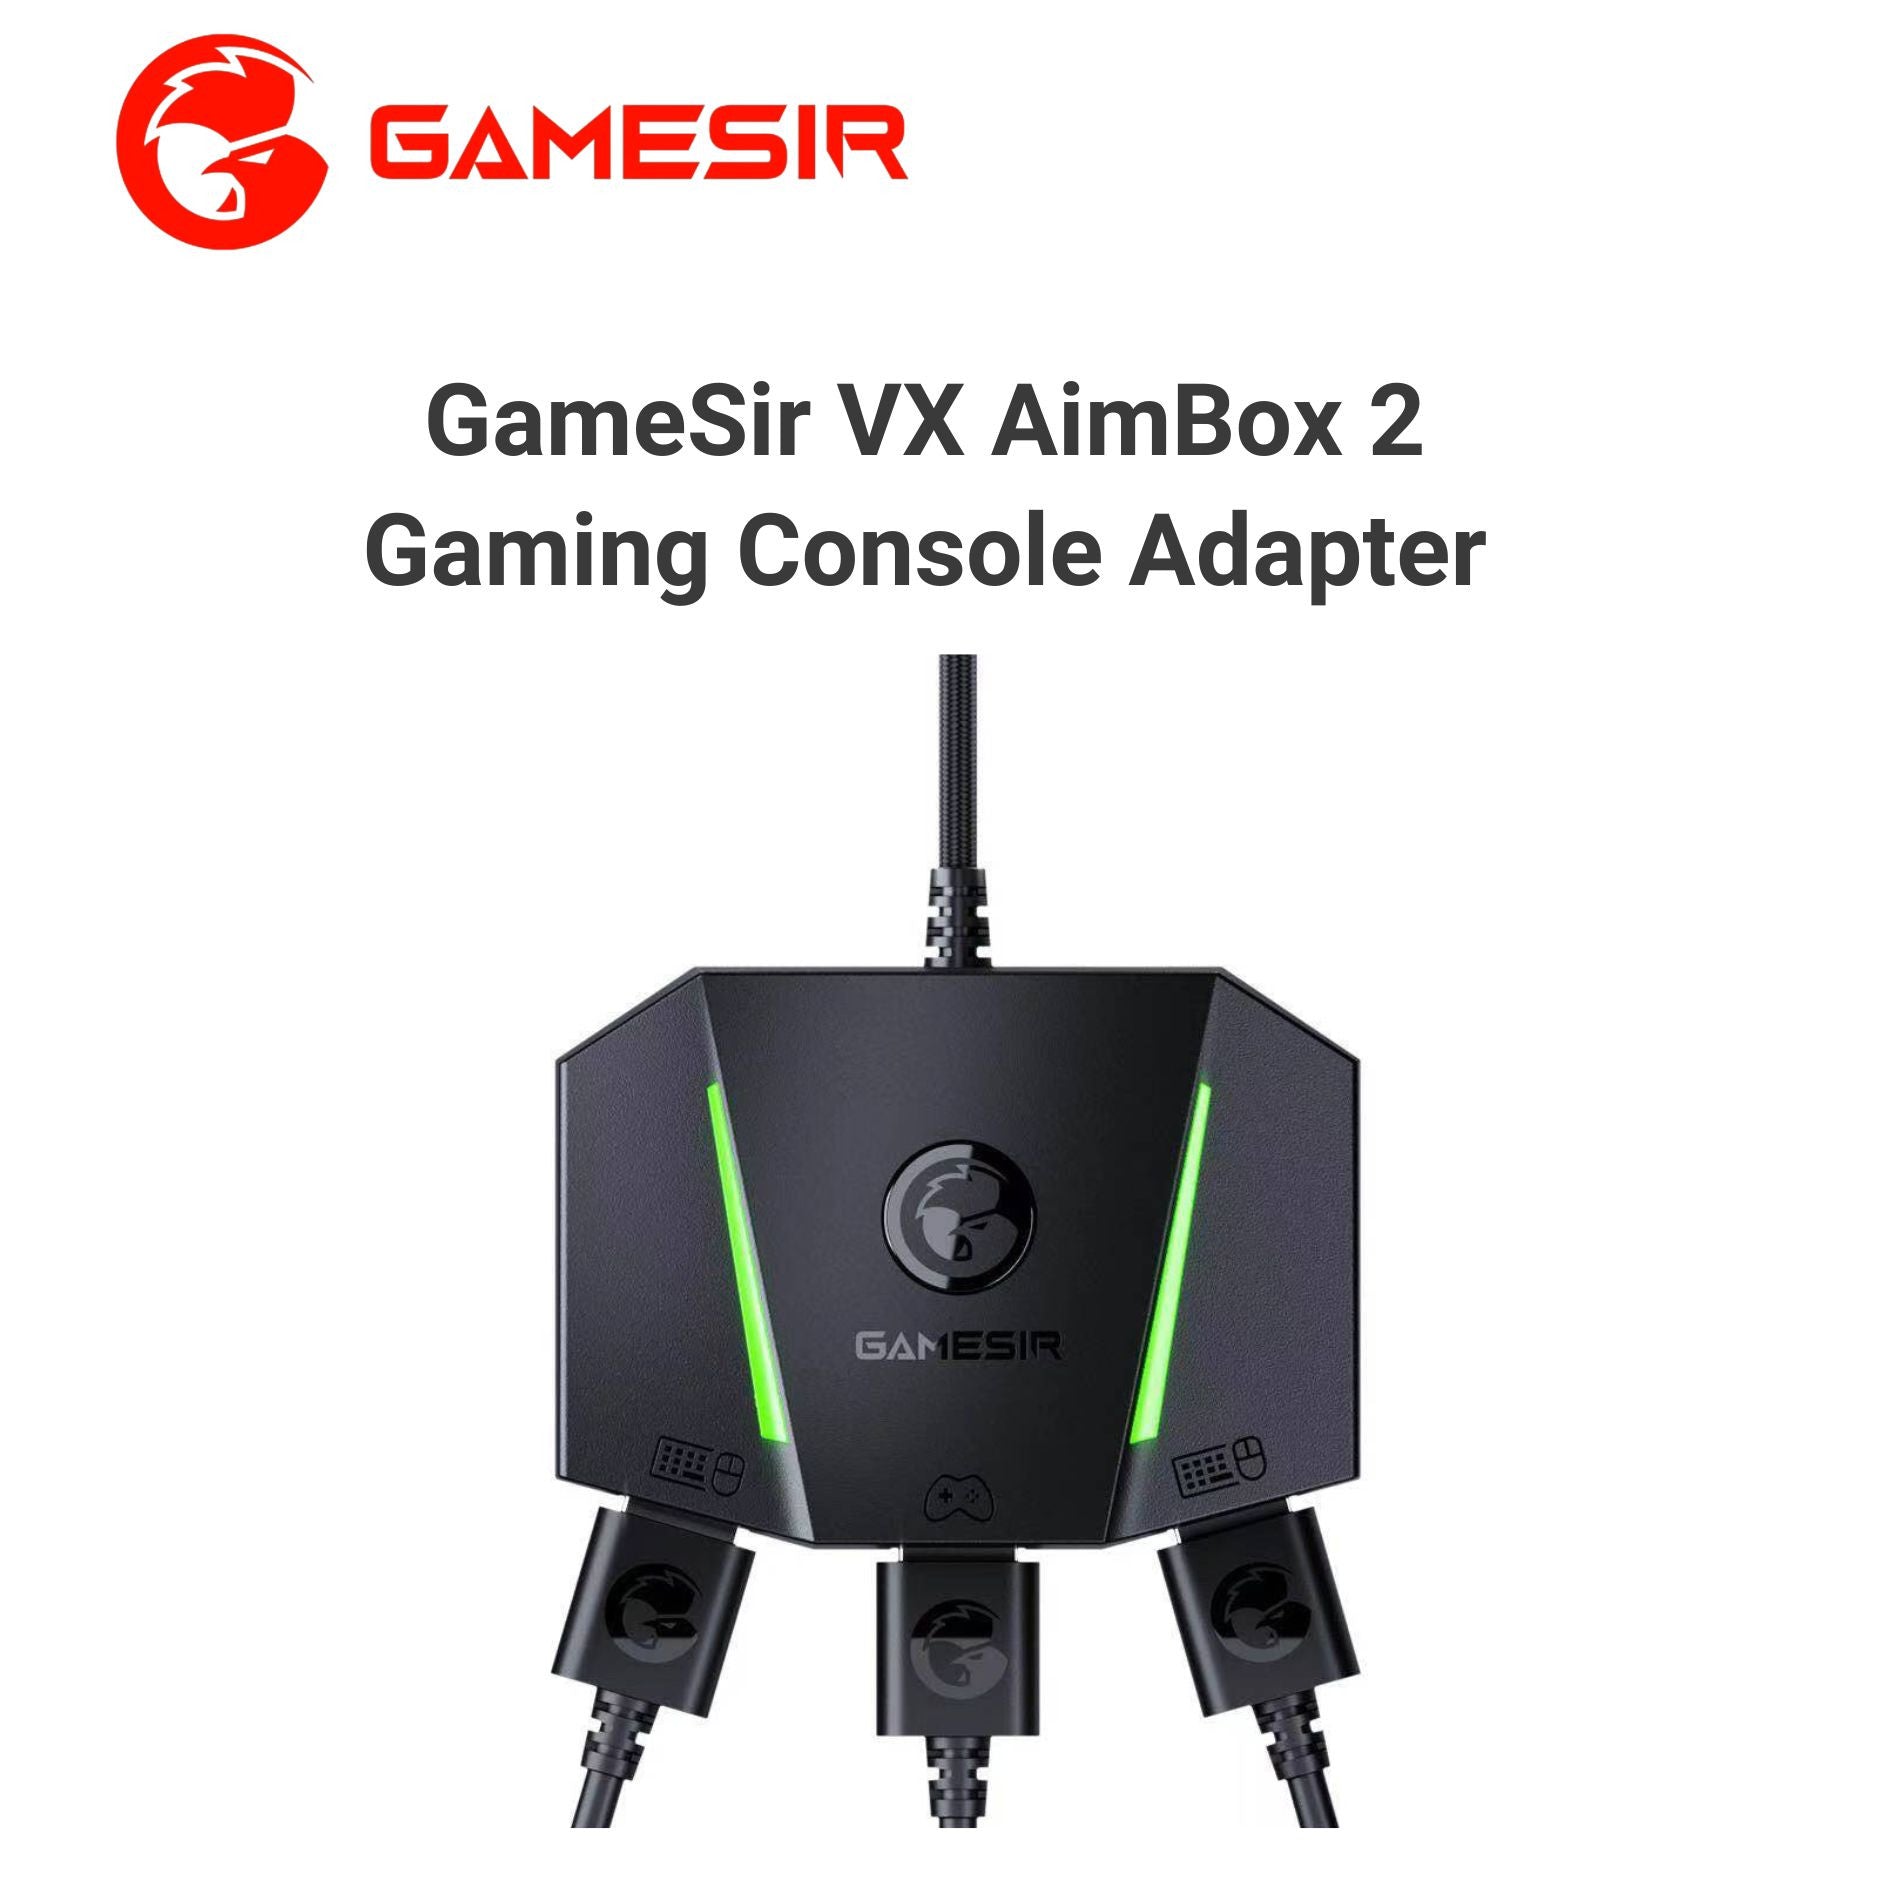 Adaptador GameSir VX2 AimBox Switch, Xbox X-S, One, PS4, PS5